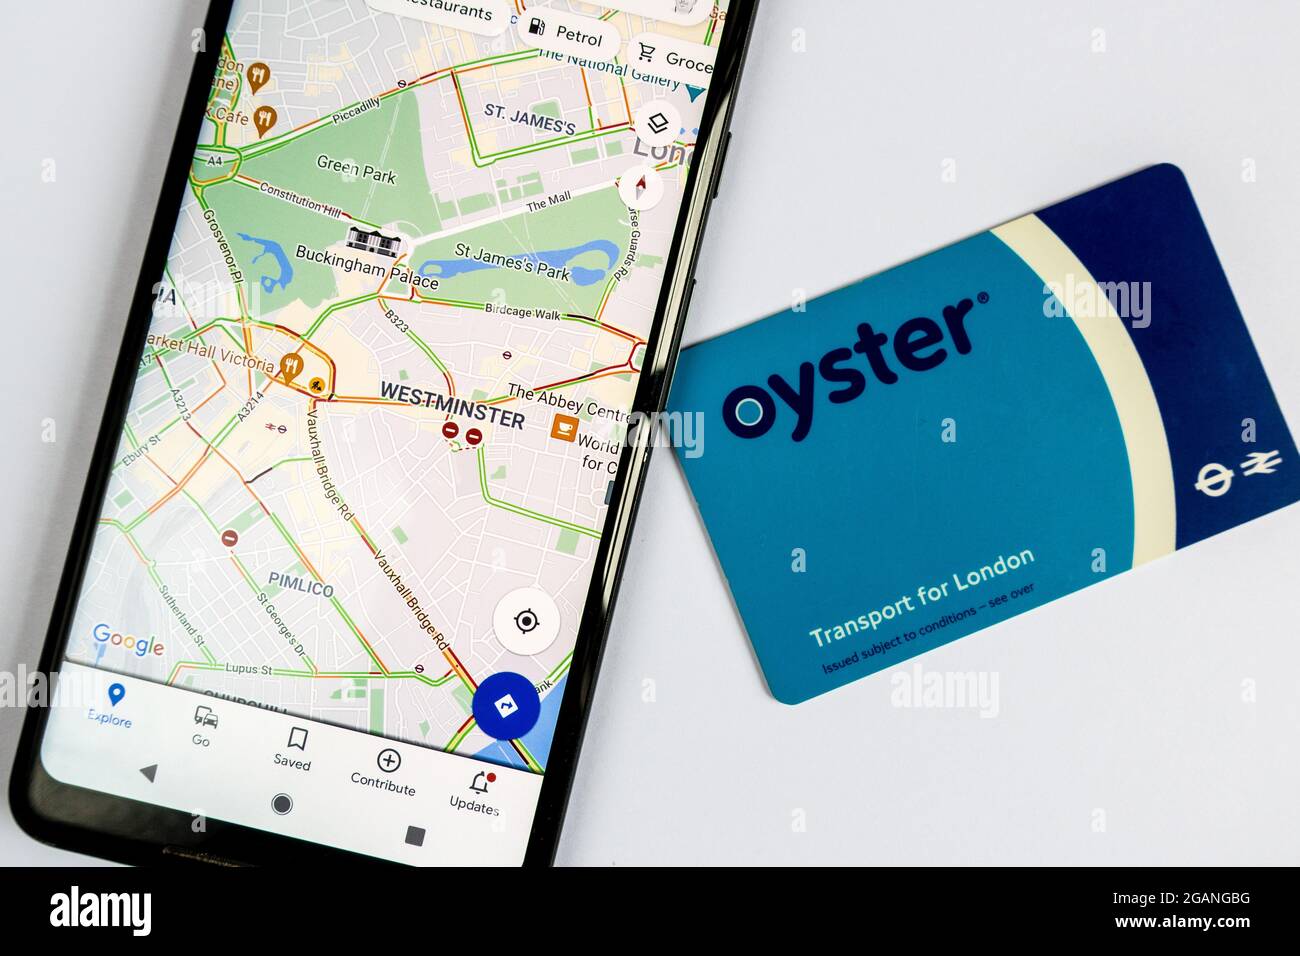 Mapas de Google en smartphone y tarjeta Oyster La tarjeta de viaje Transport for London Foto de stock